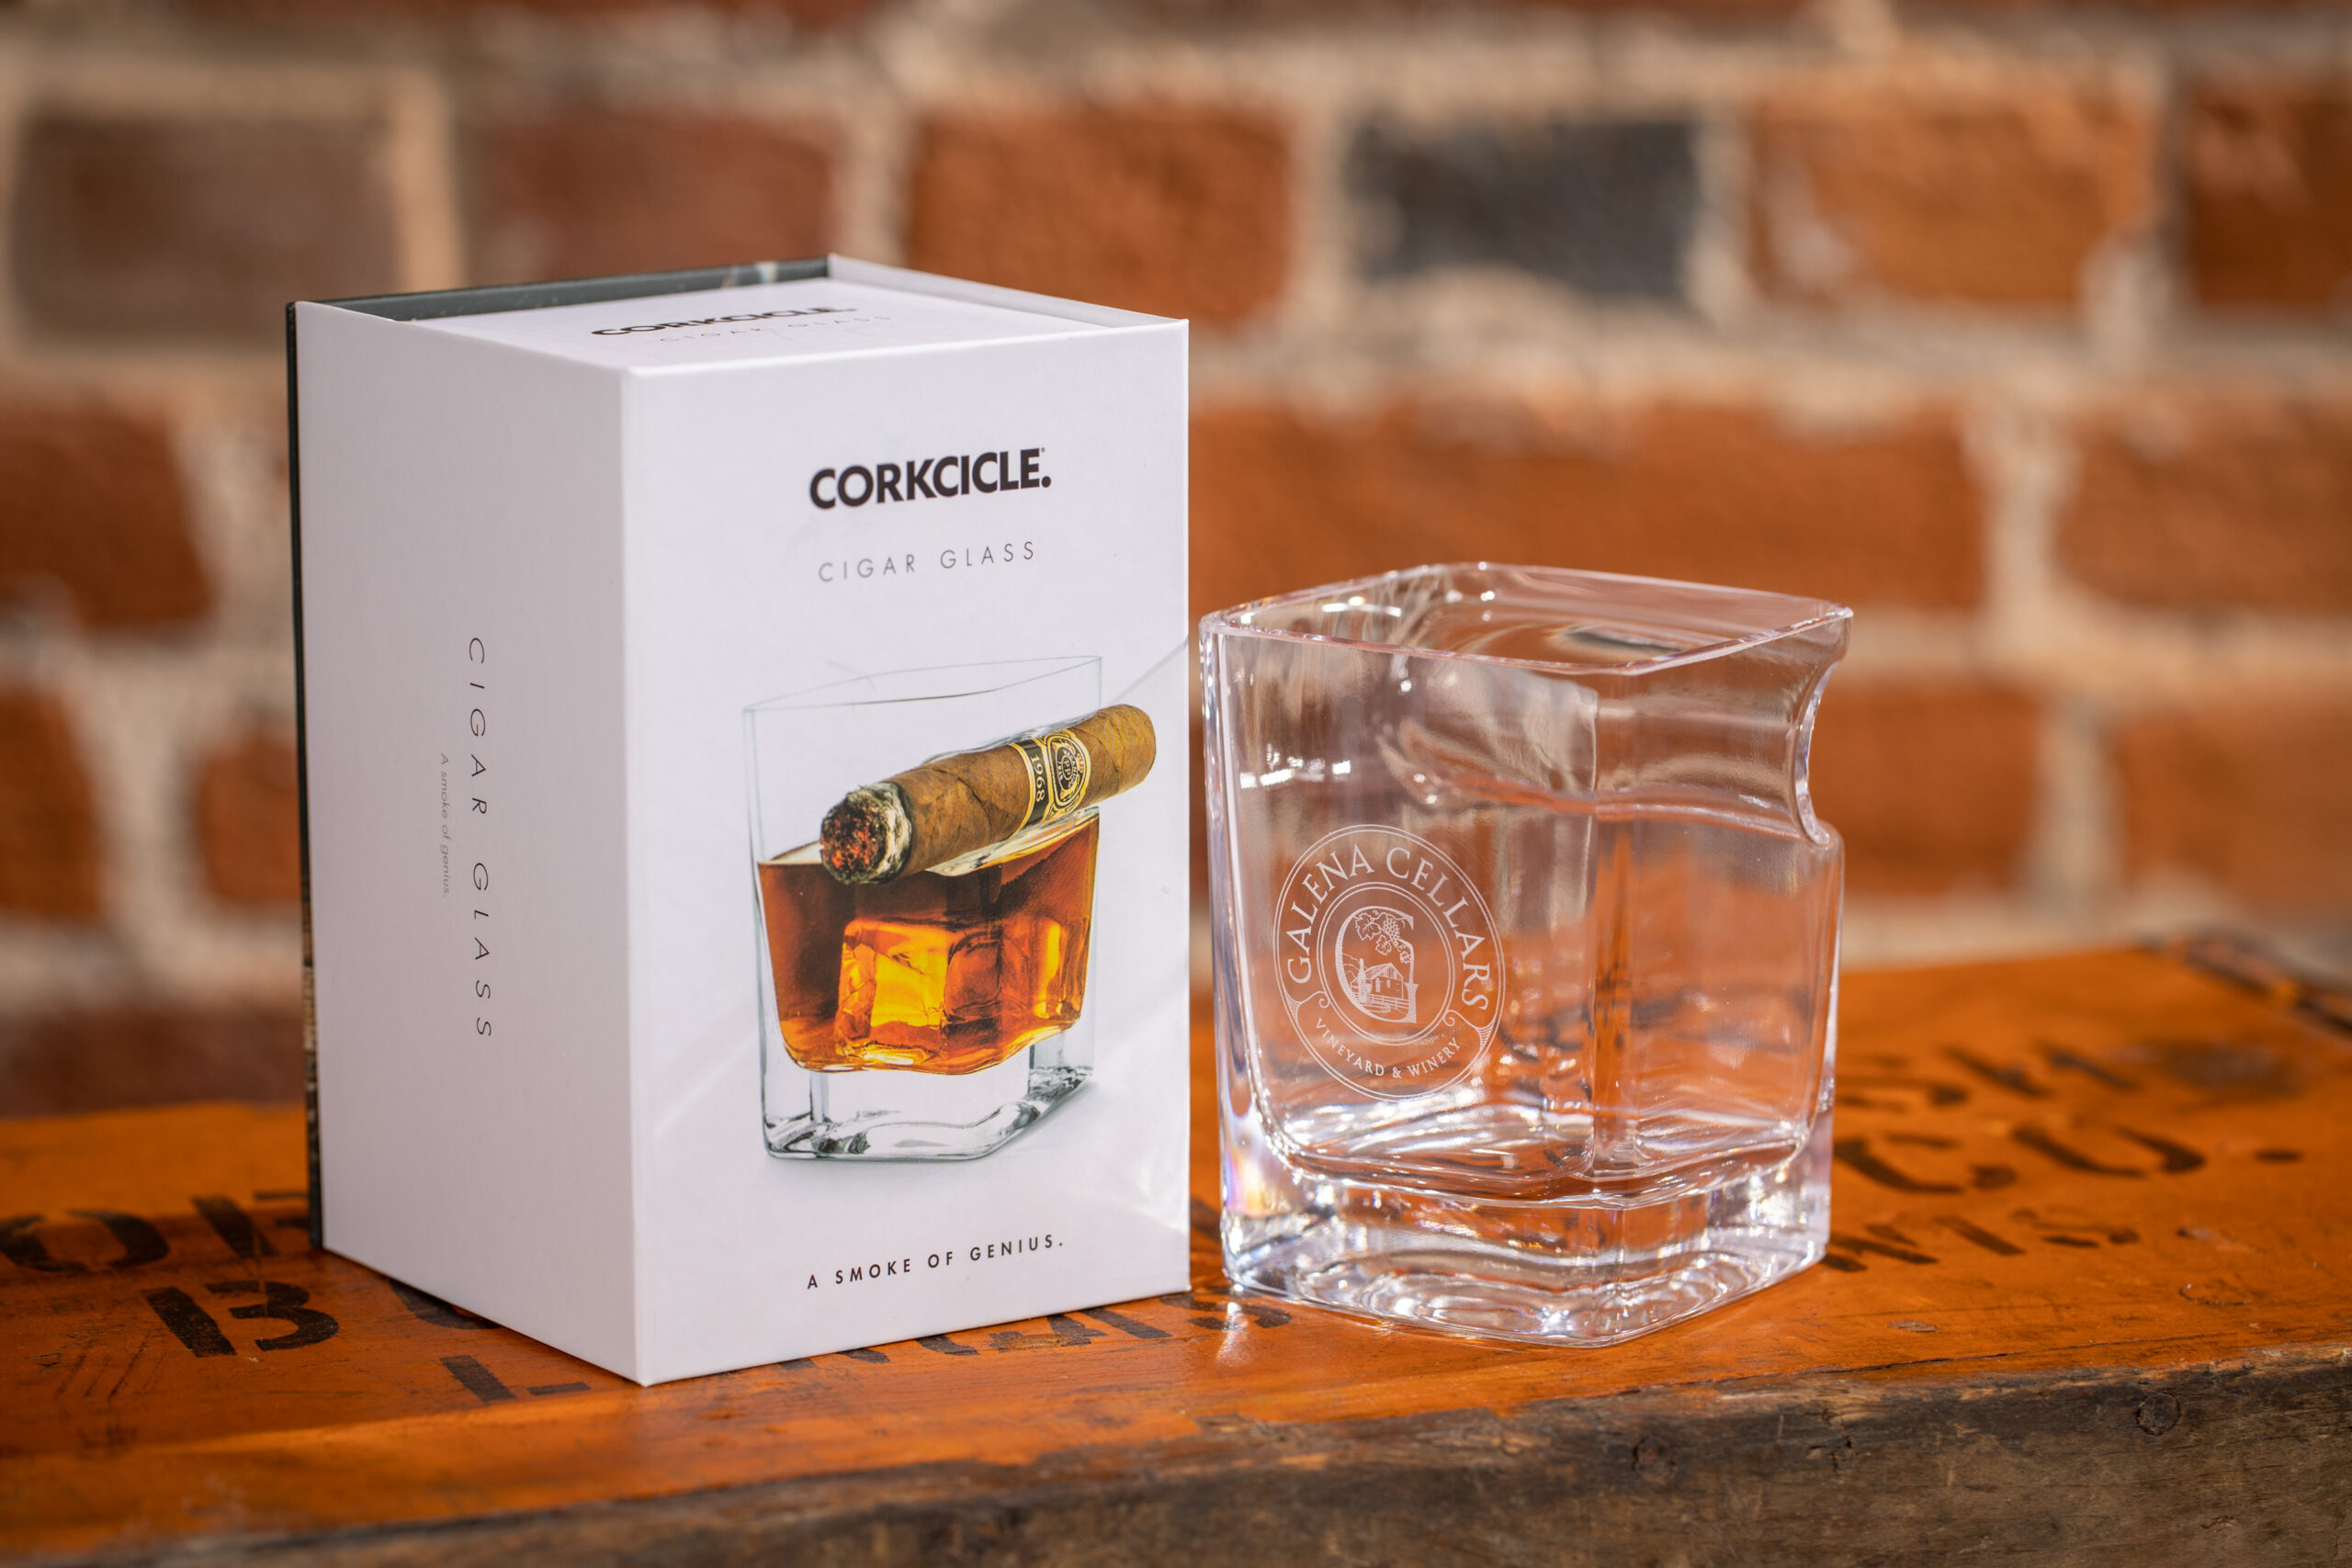 Corkcicle cigar glass